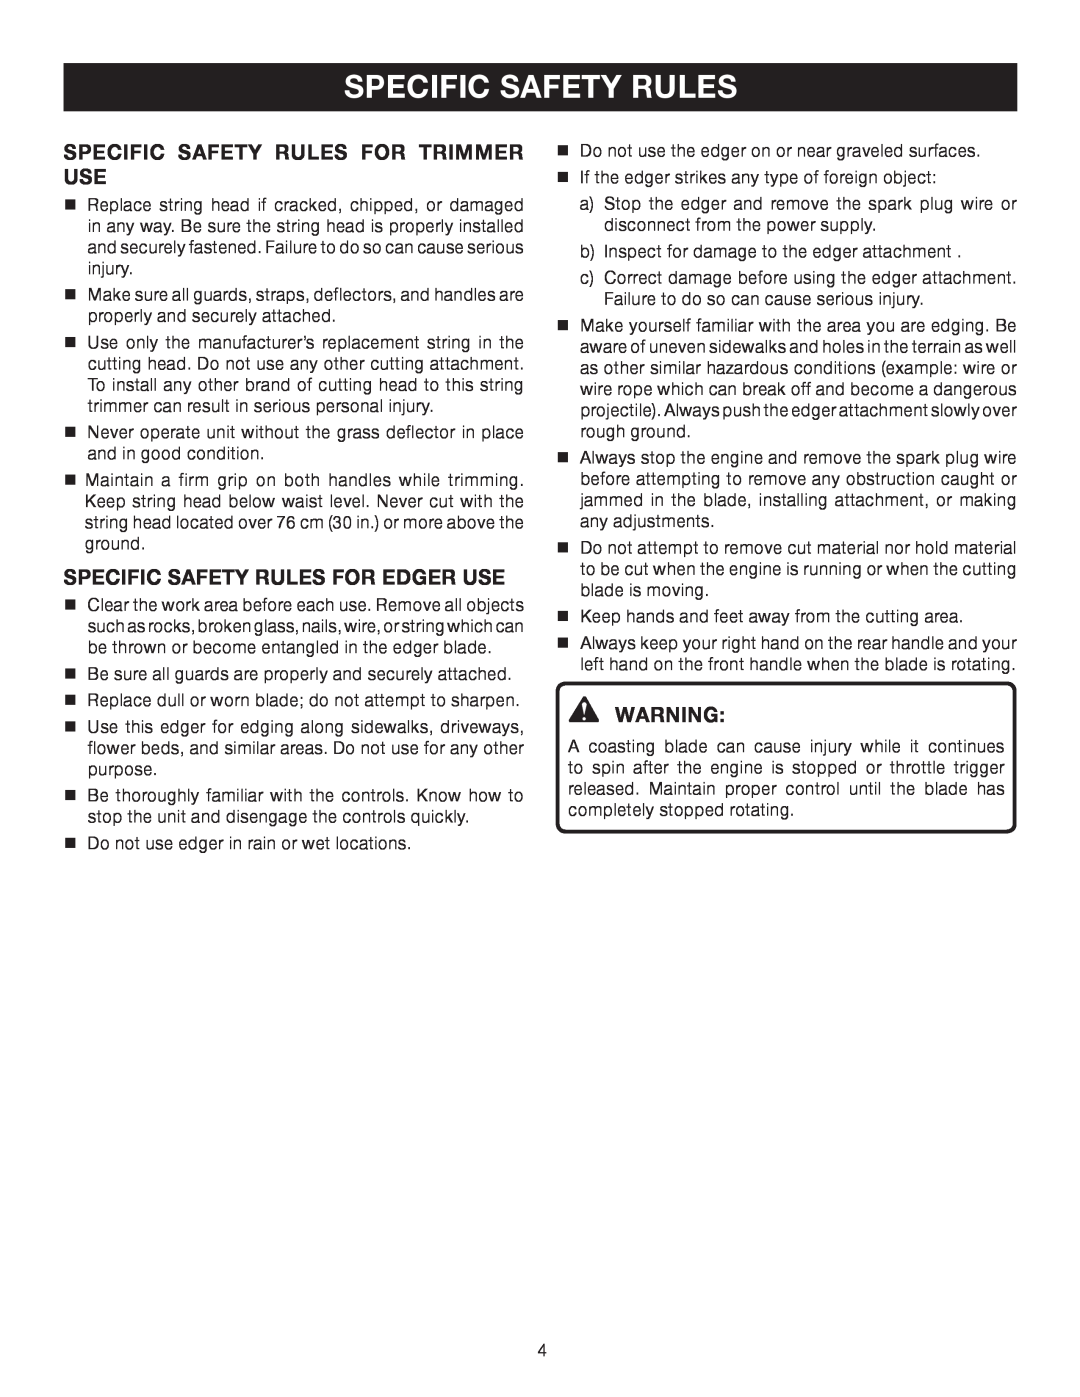 Ryobi Outdoor RY30120, RY30130 manual Specific Safety Rules For Trimmer Use, Specific Safety Rules For Edger Use 